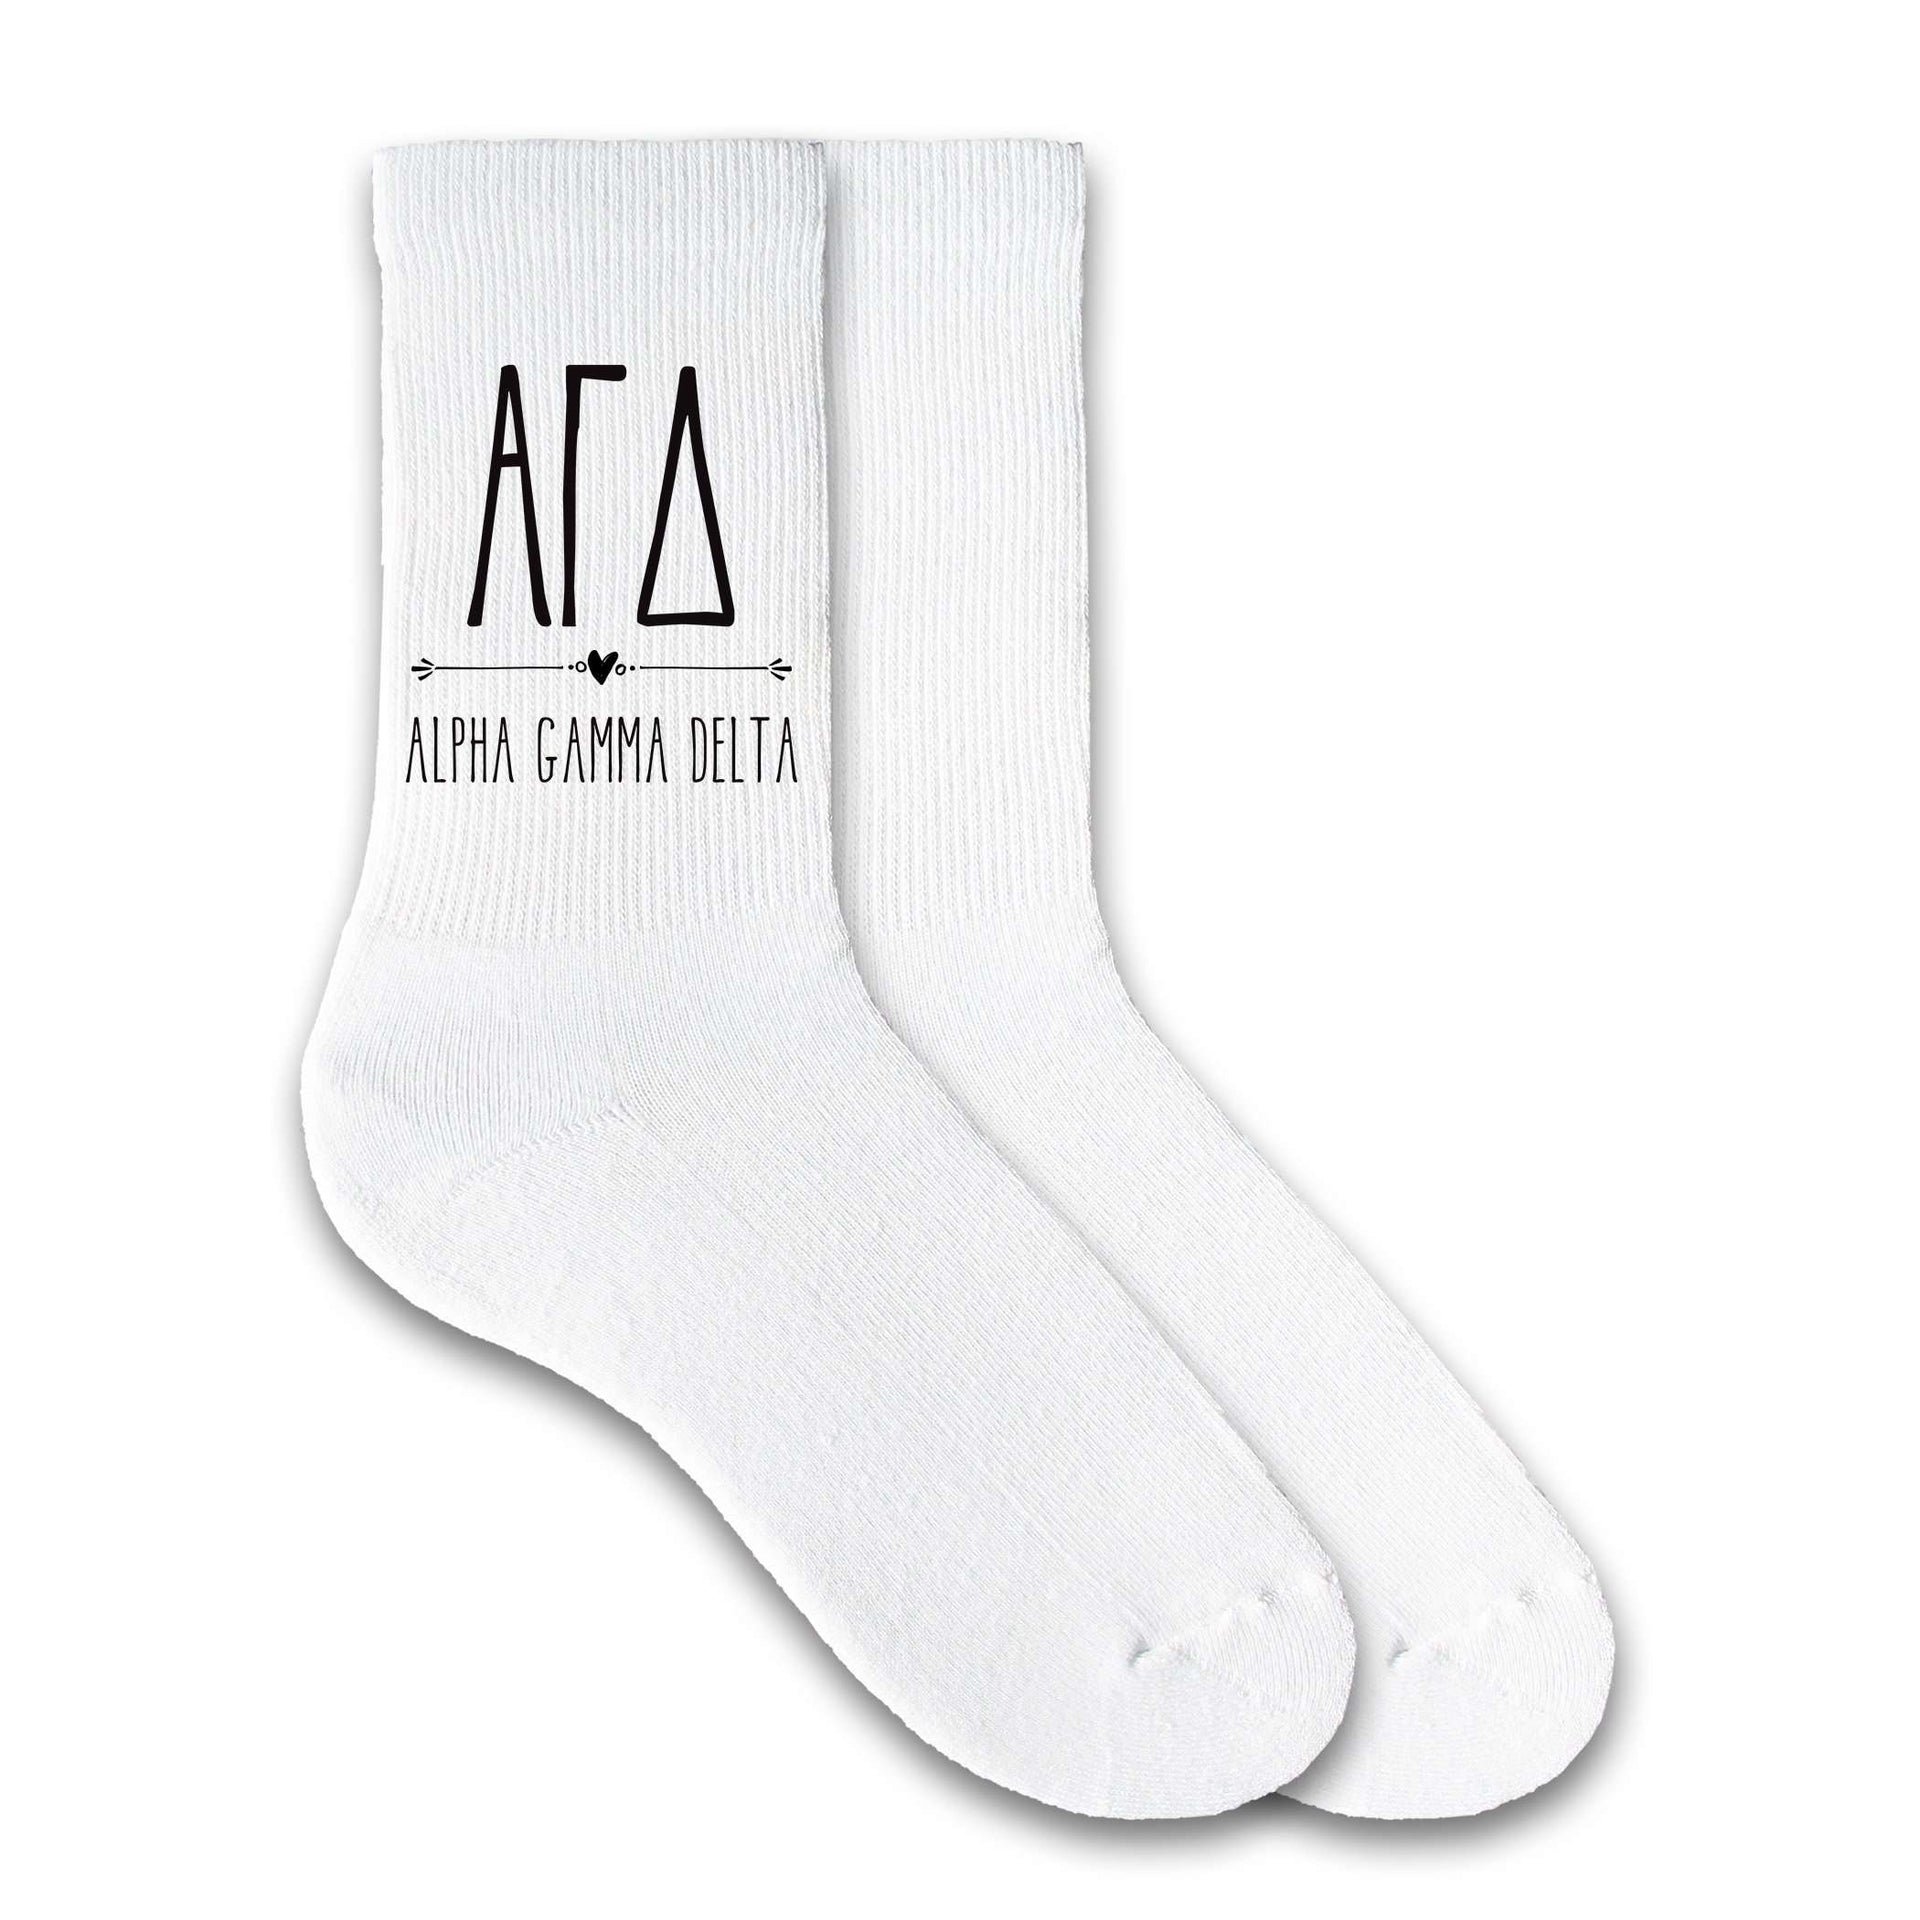 Alpha Gamma Delta sorority name custom printed on white cotton crew socks.